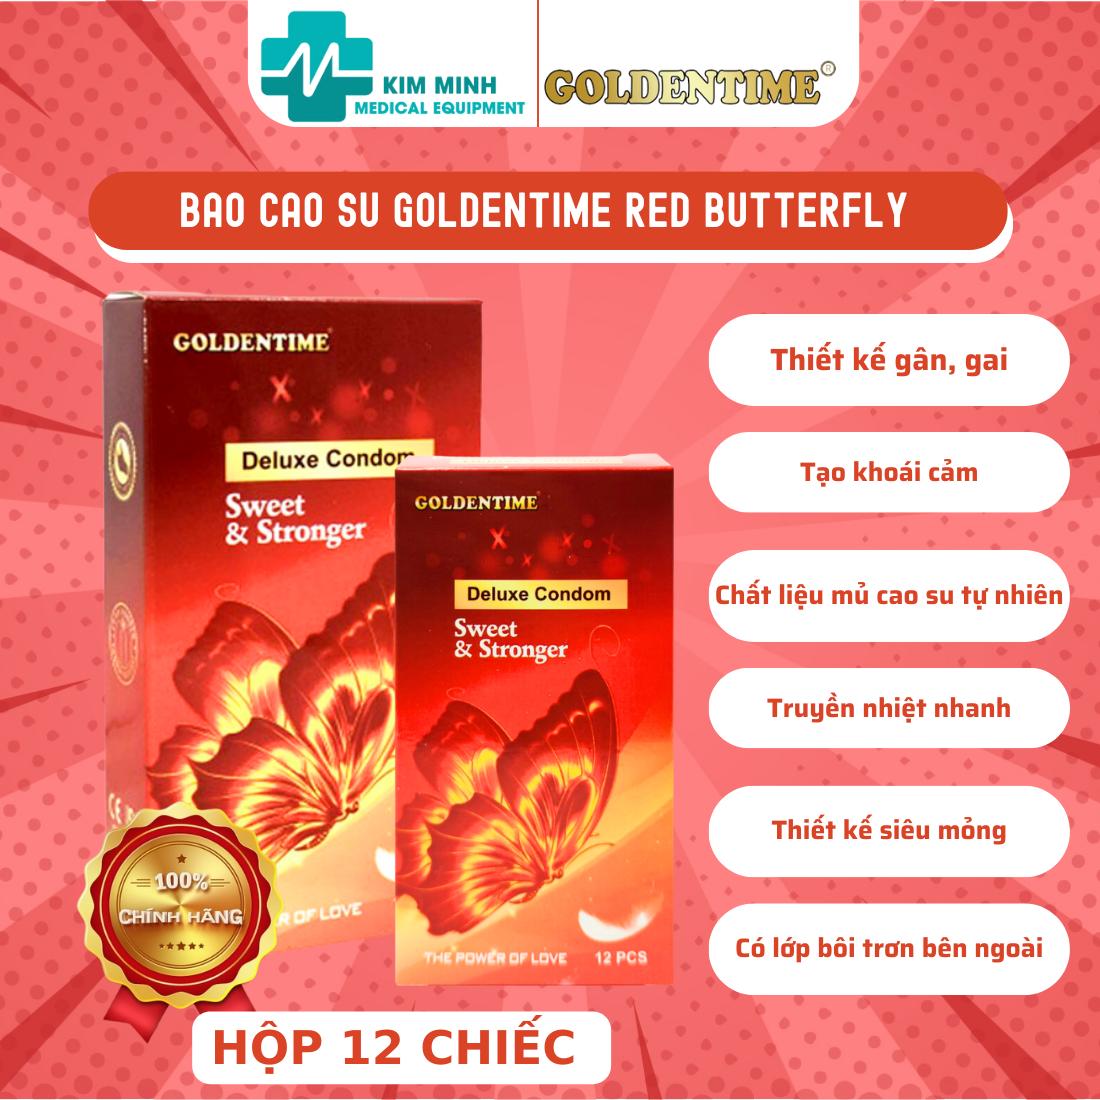 Bao cao su Goldentime Red Butterfly hộp 12 chiếc bao cao su gân gai, size 52mm